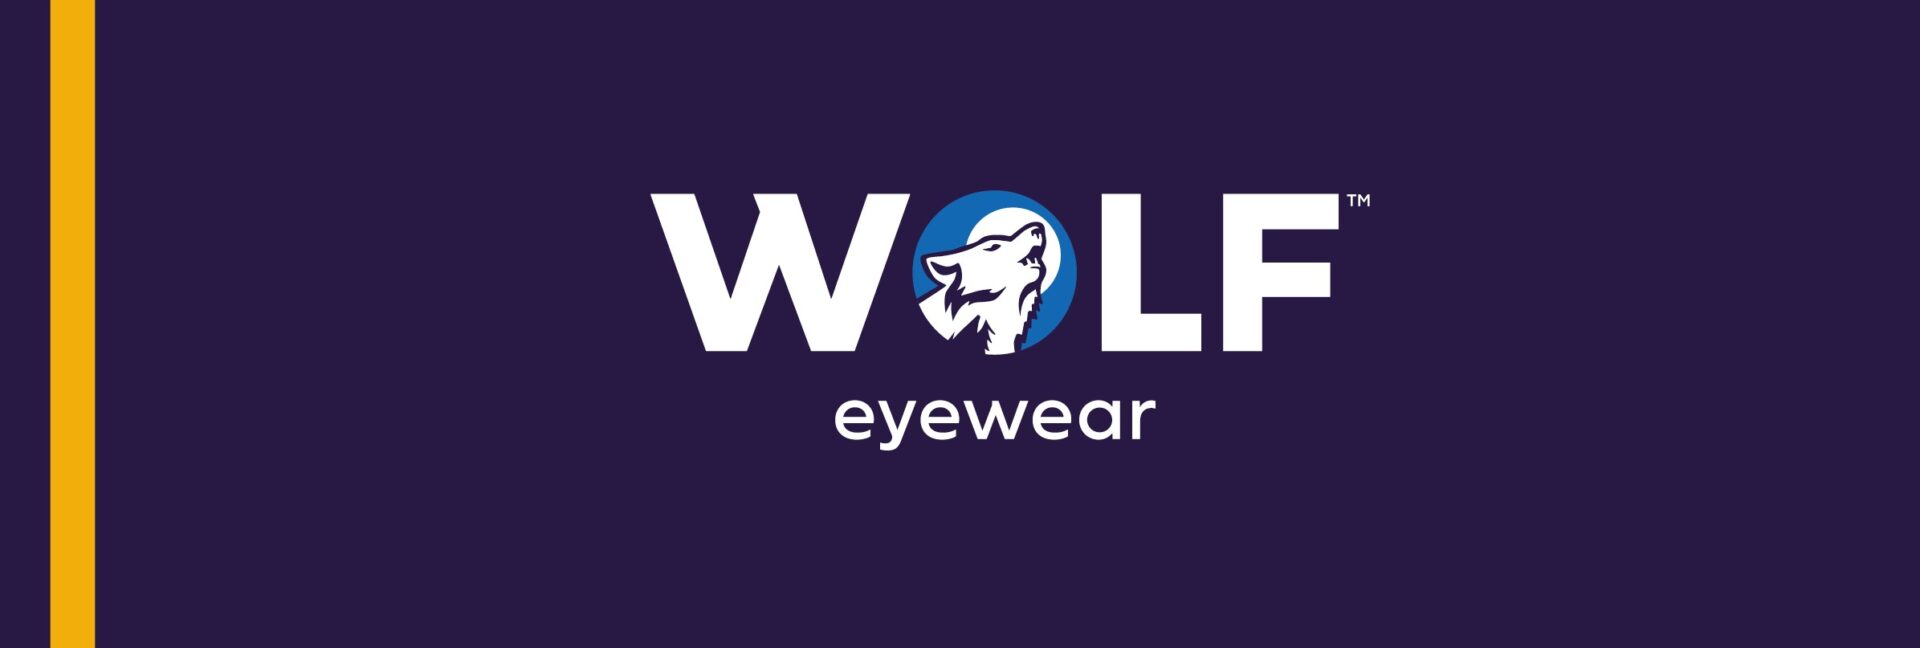 Wolf Eyewear Promotion Day 11th October